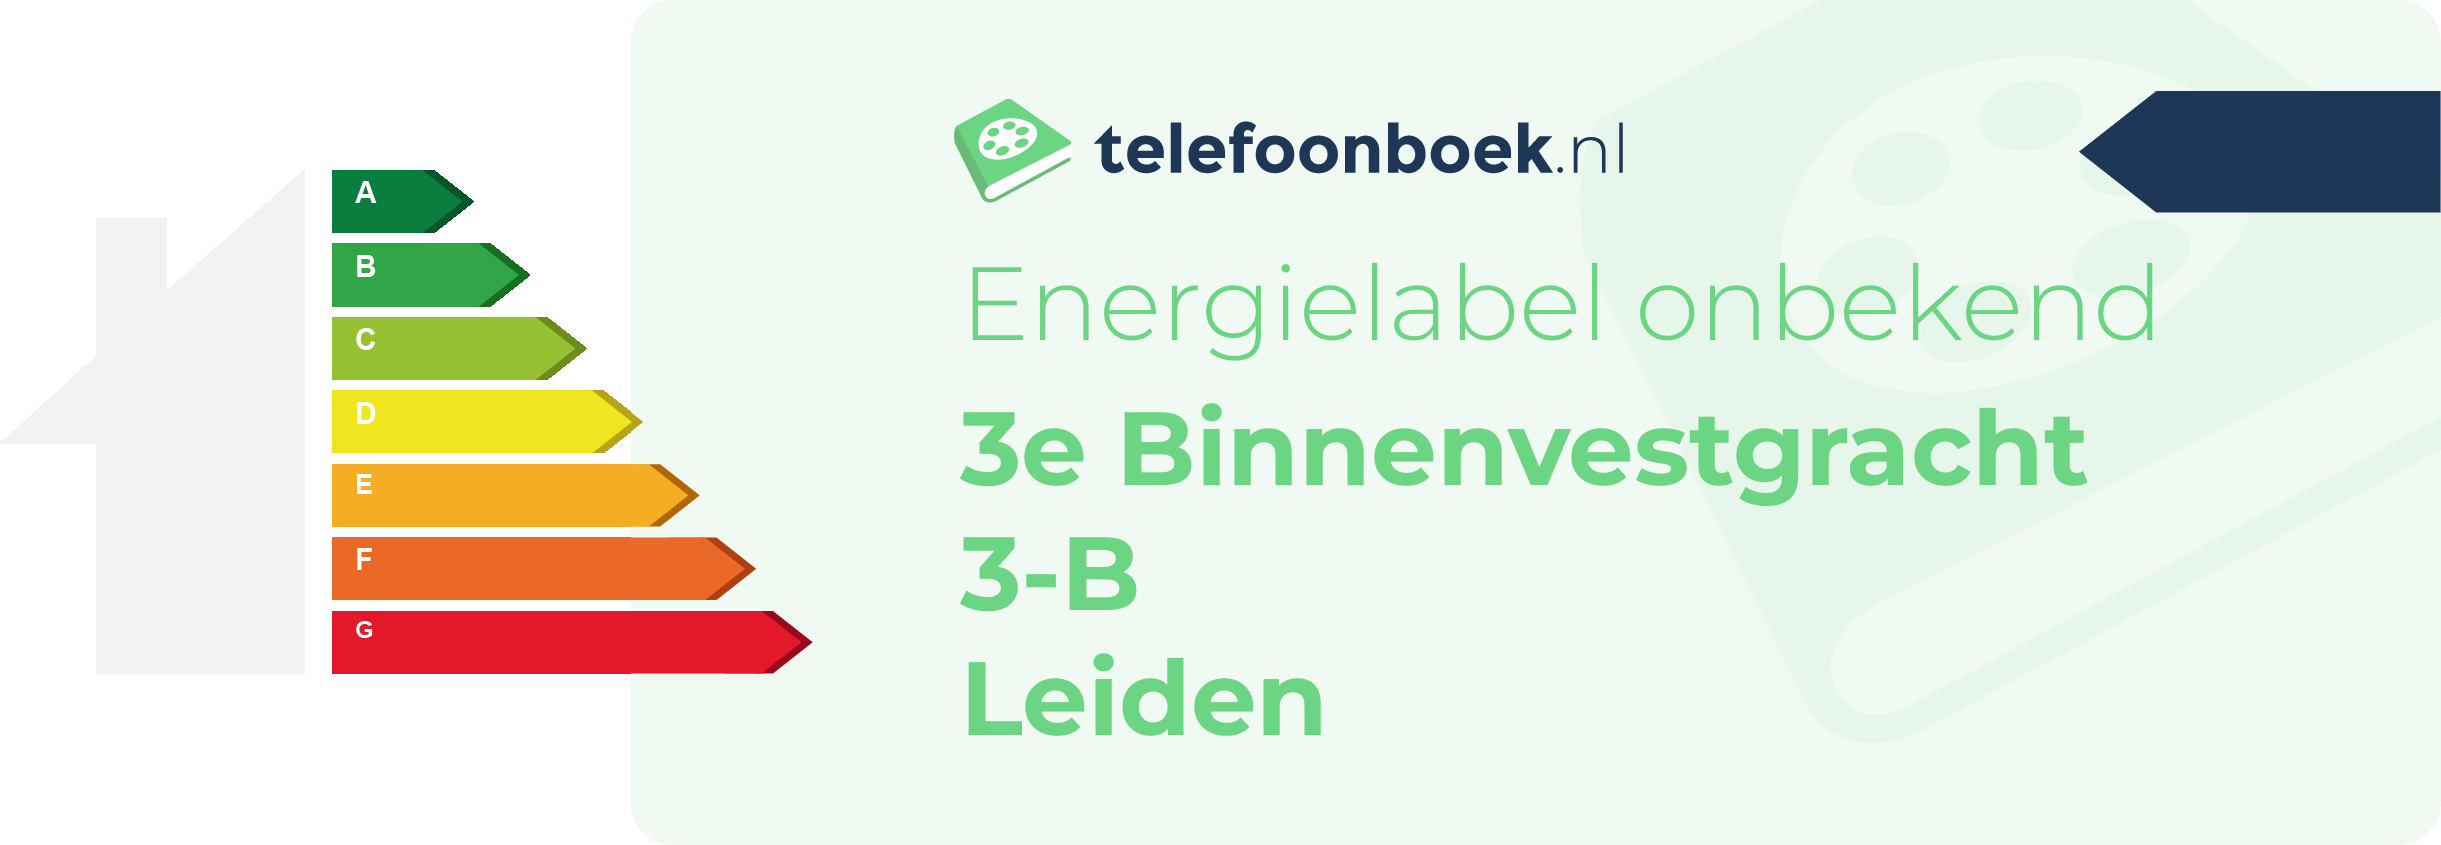 Energielabel 3e Binnenvestgracht 3-B Leiden